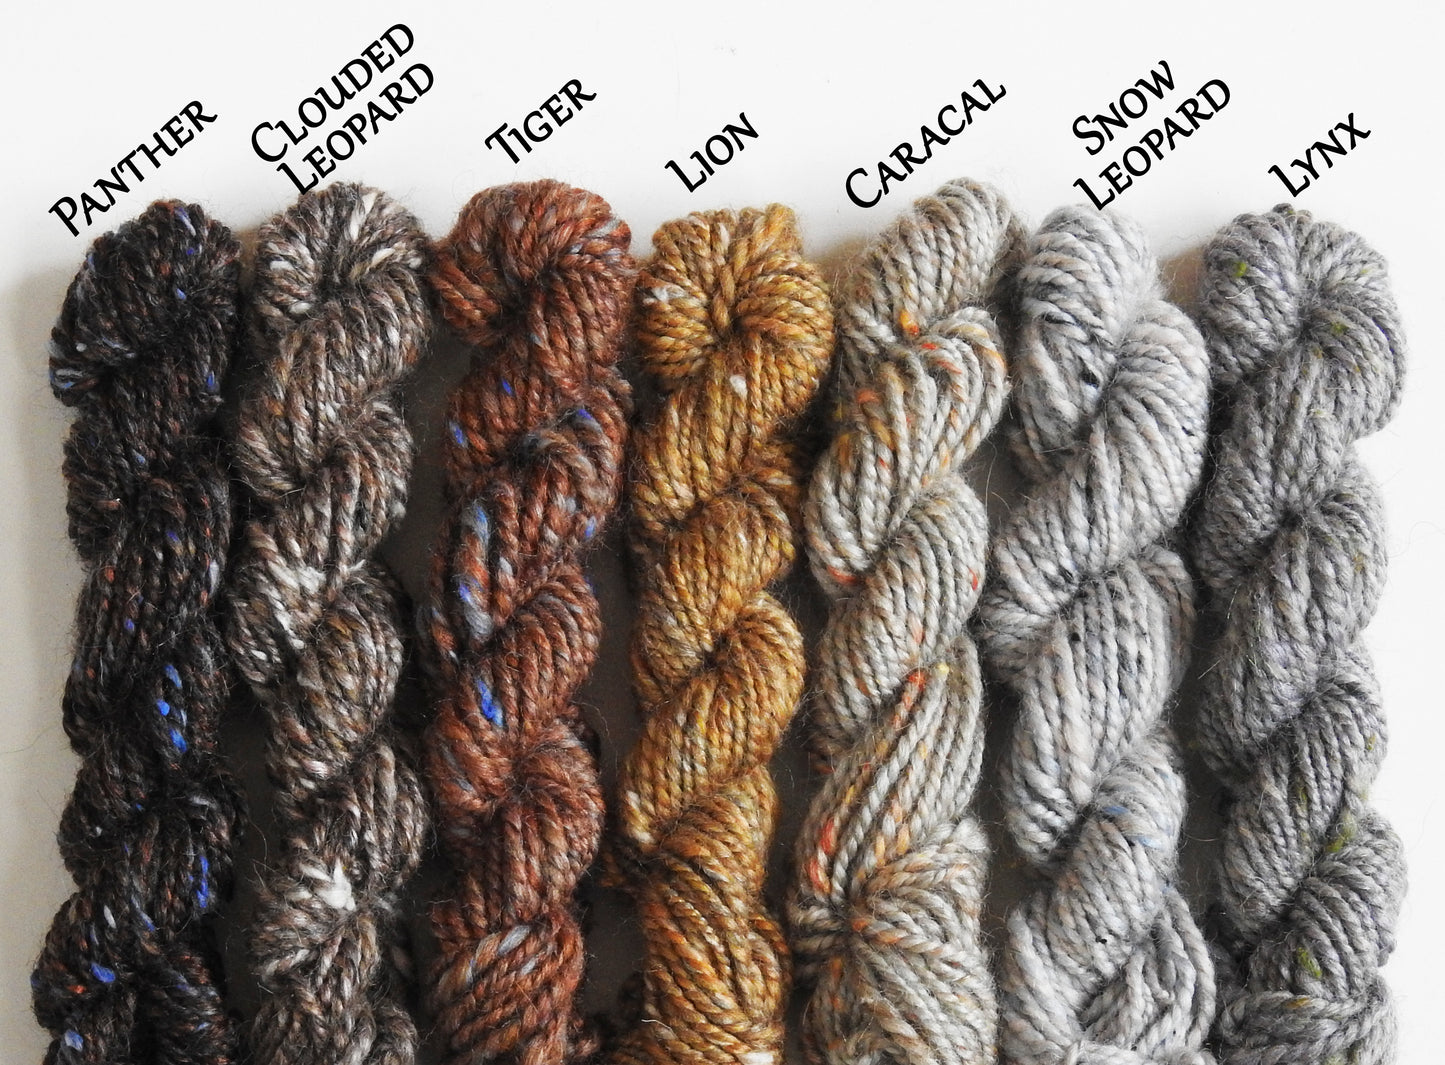 Lynx - Custom Blended Top- Merino/ Shetland/ Tussah Silk/ Baby Camel /Tweed Blend (25/25/25/15/10)